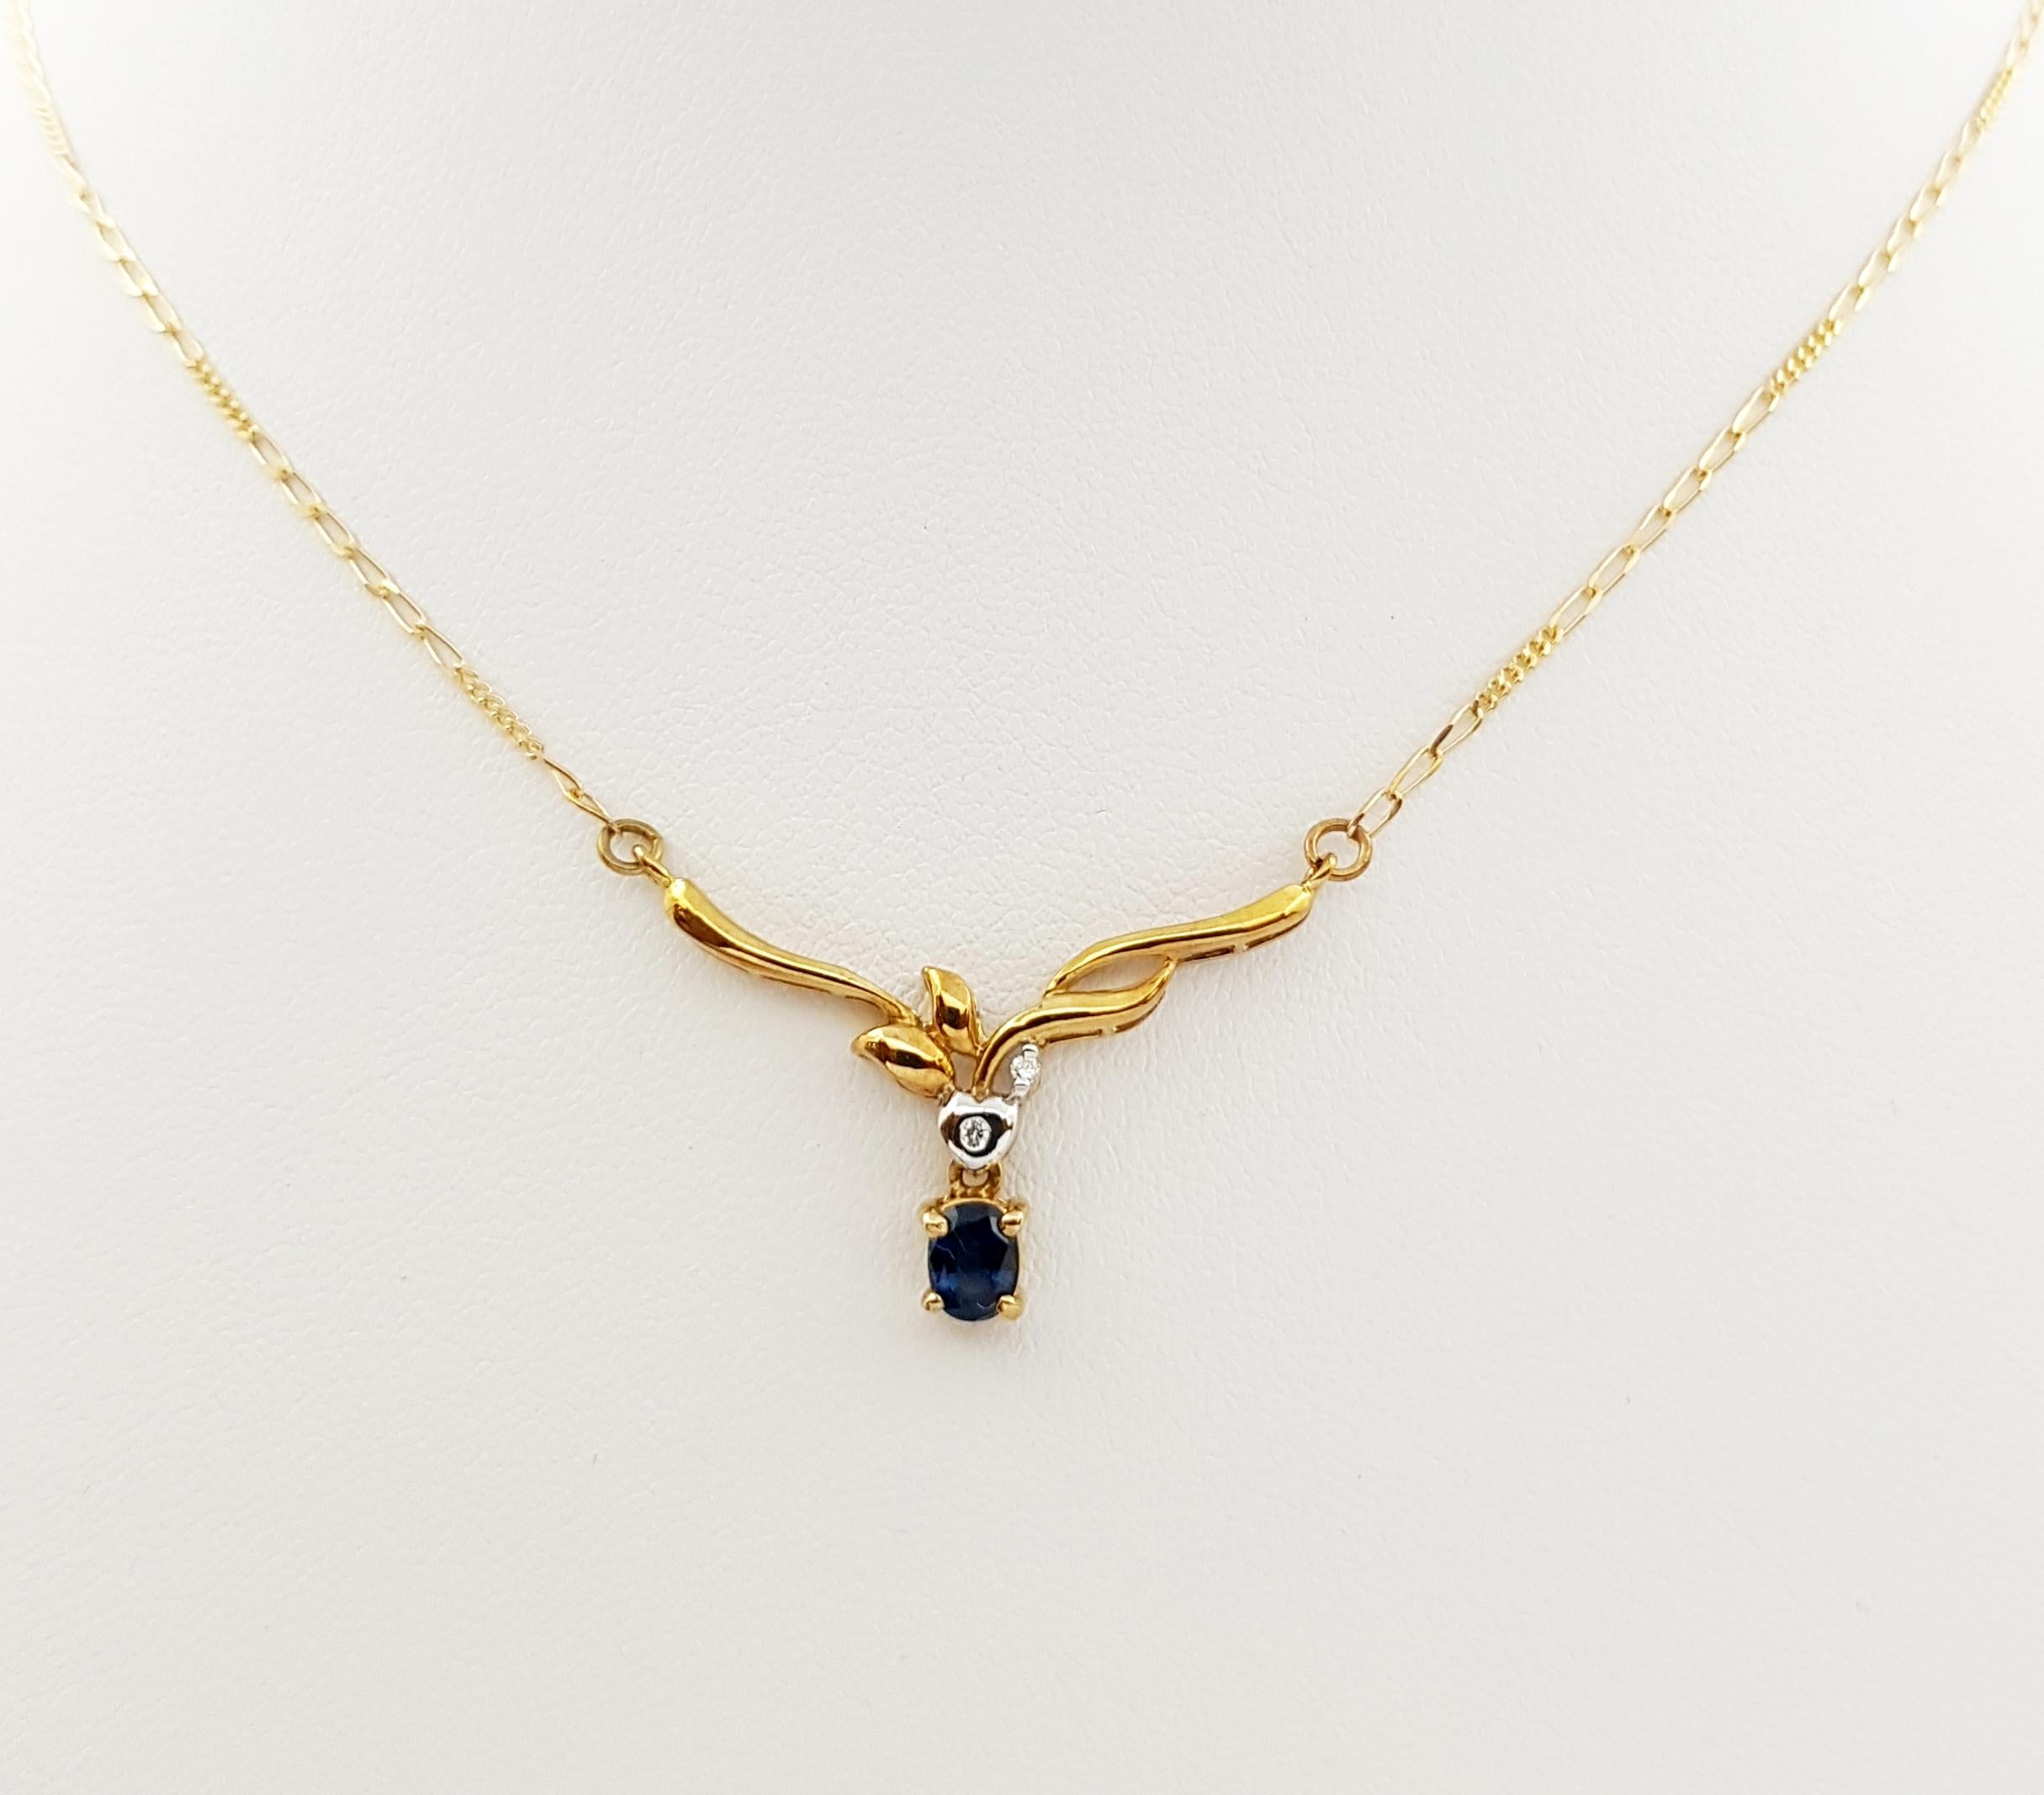 Blue Sapphire 0.44 carat with Diamond 0.02 carat Necklace set in 18 Karat Gold Settings

Width: 2.5 cm 
Length: 45.0 cm
Total Weight: 3.55 grams

